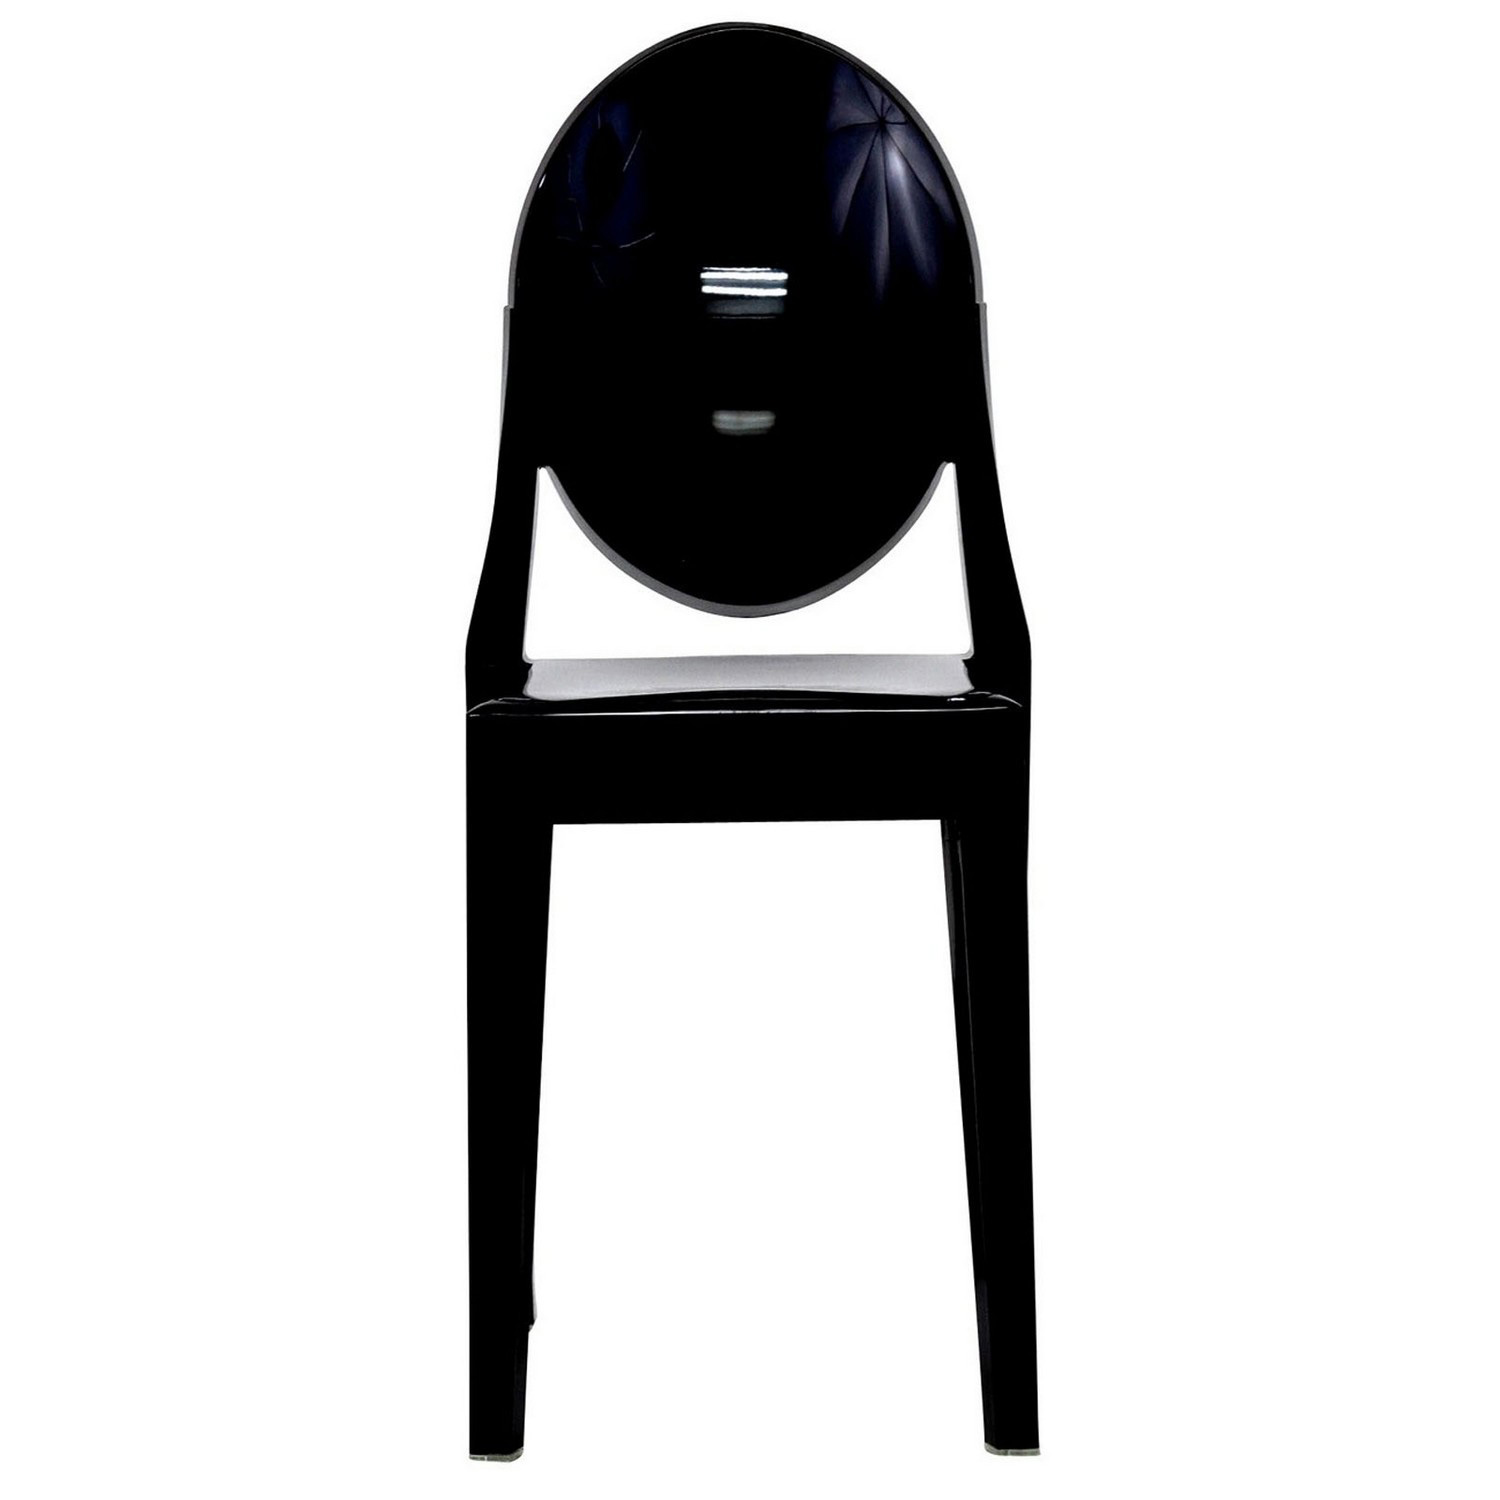 Modway Casper Dining Chairs Set of 2 - Black